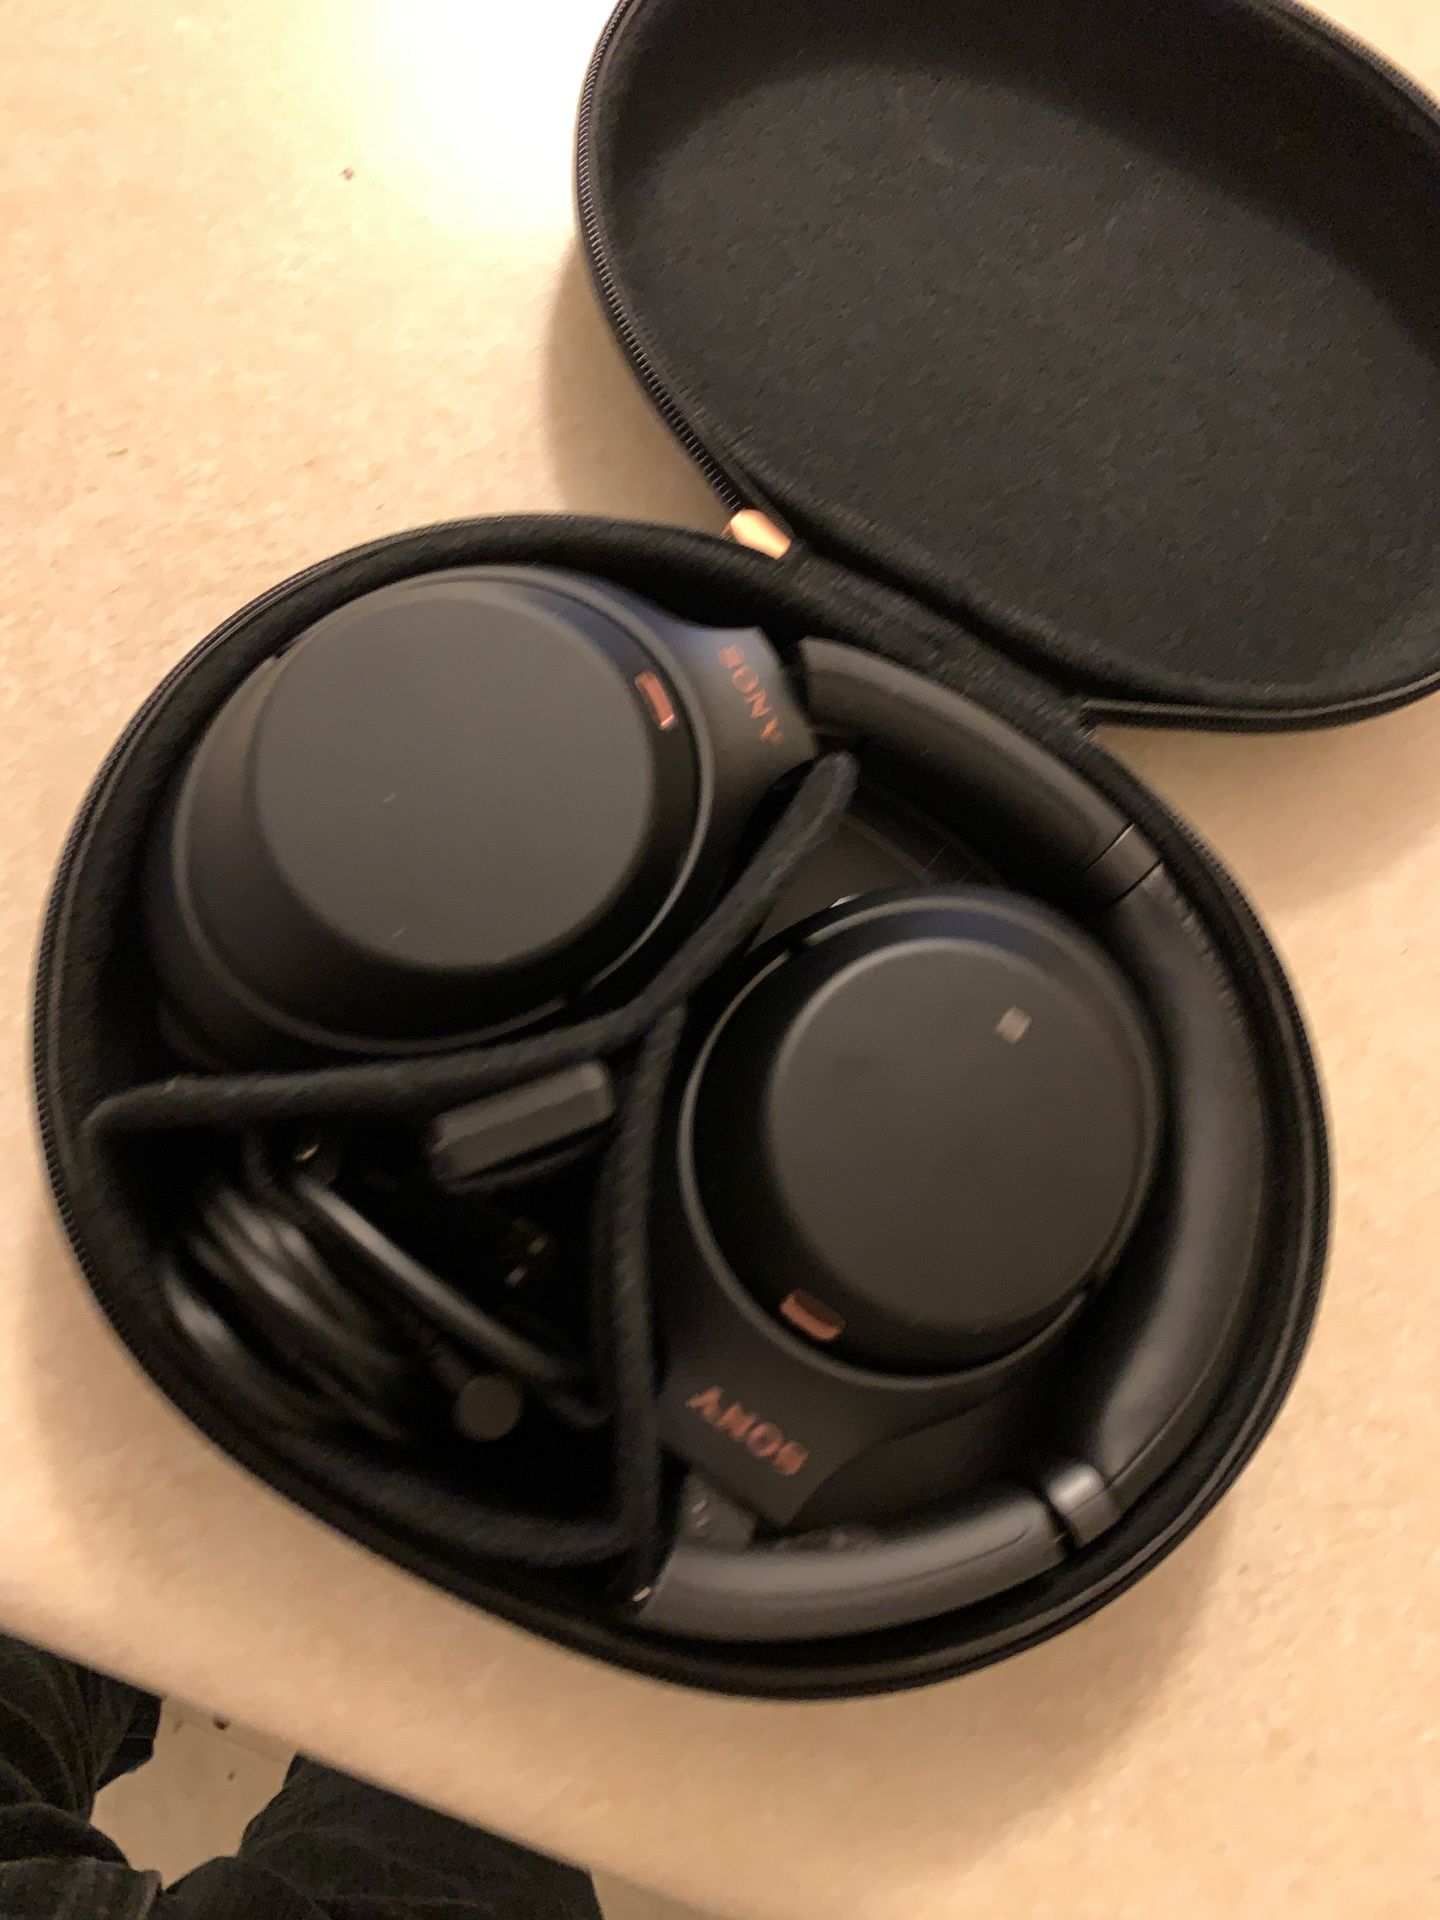 Sony 1000XM3 noise canceling / Bluetooth headphones